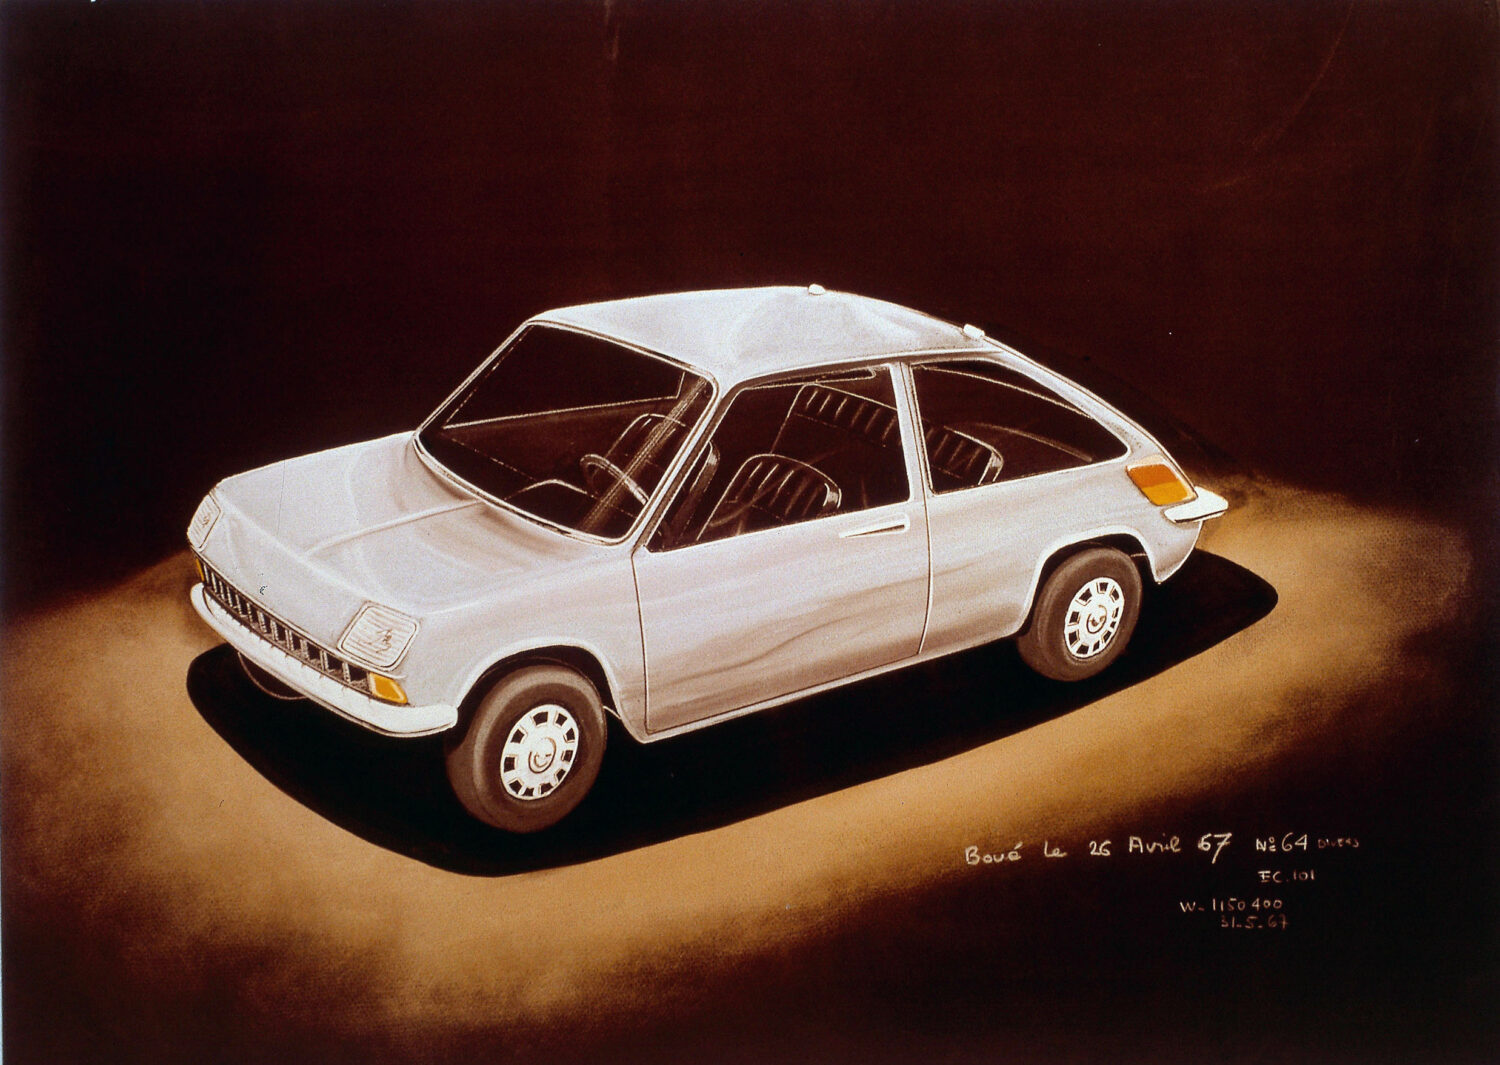 1967 - Etude design Renault 5